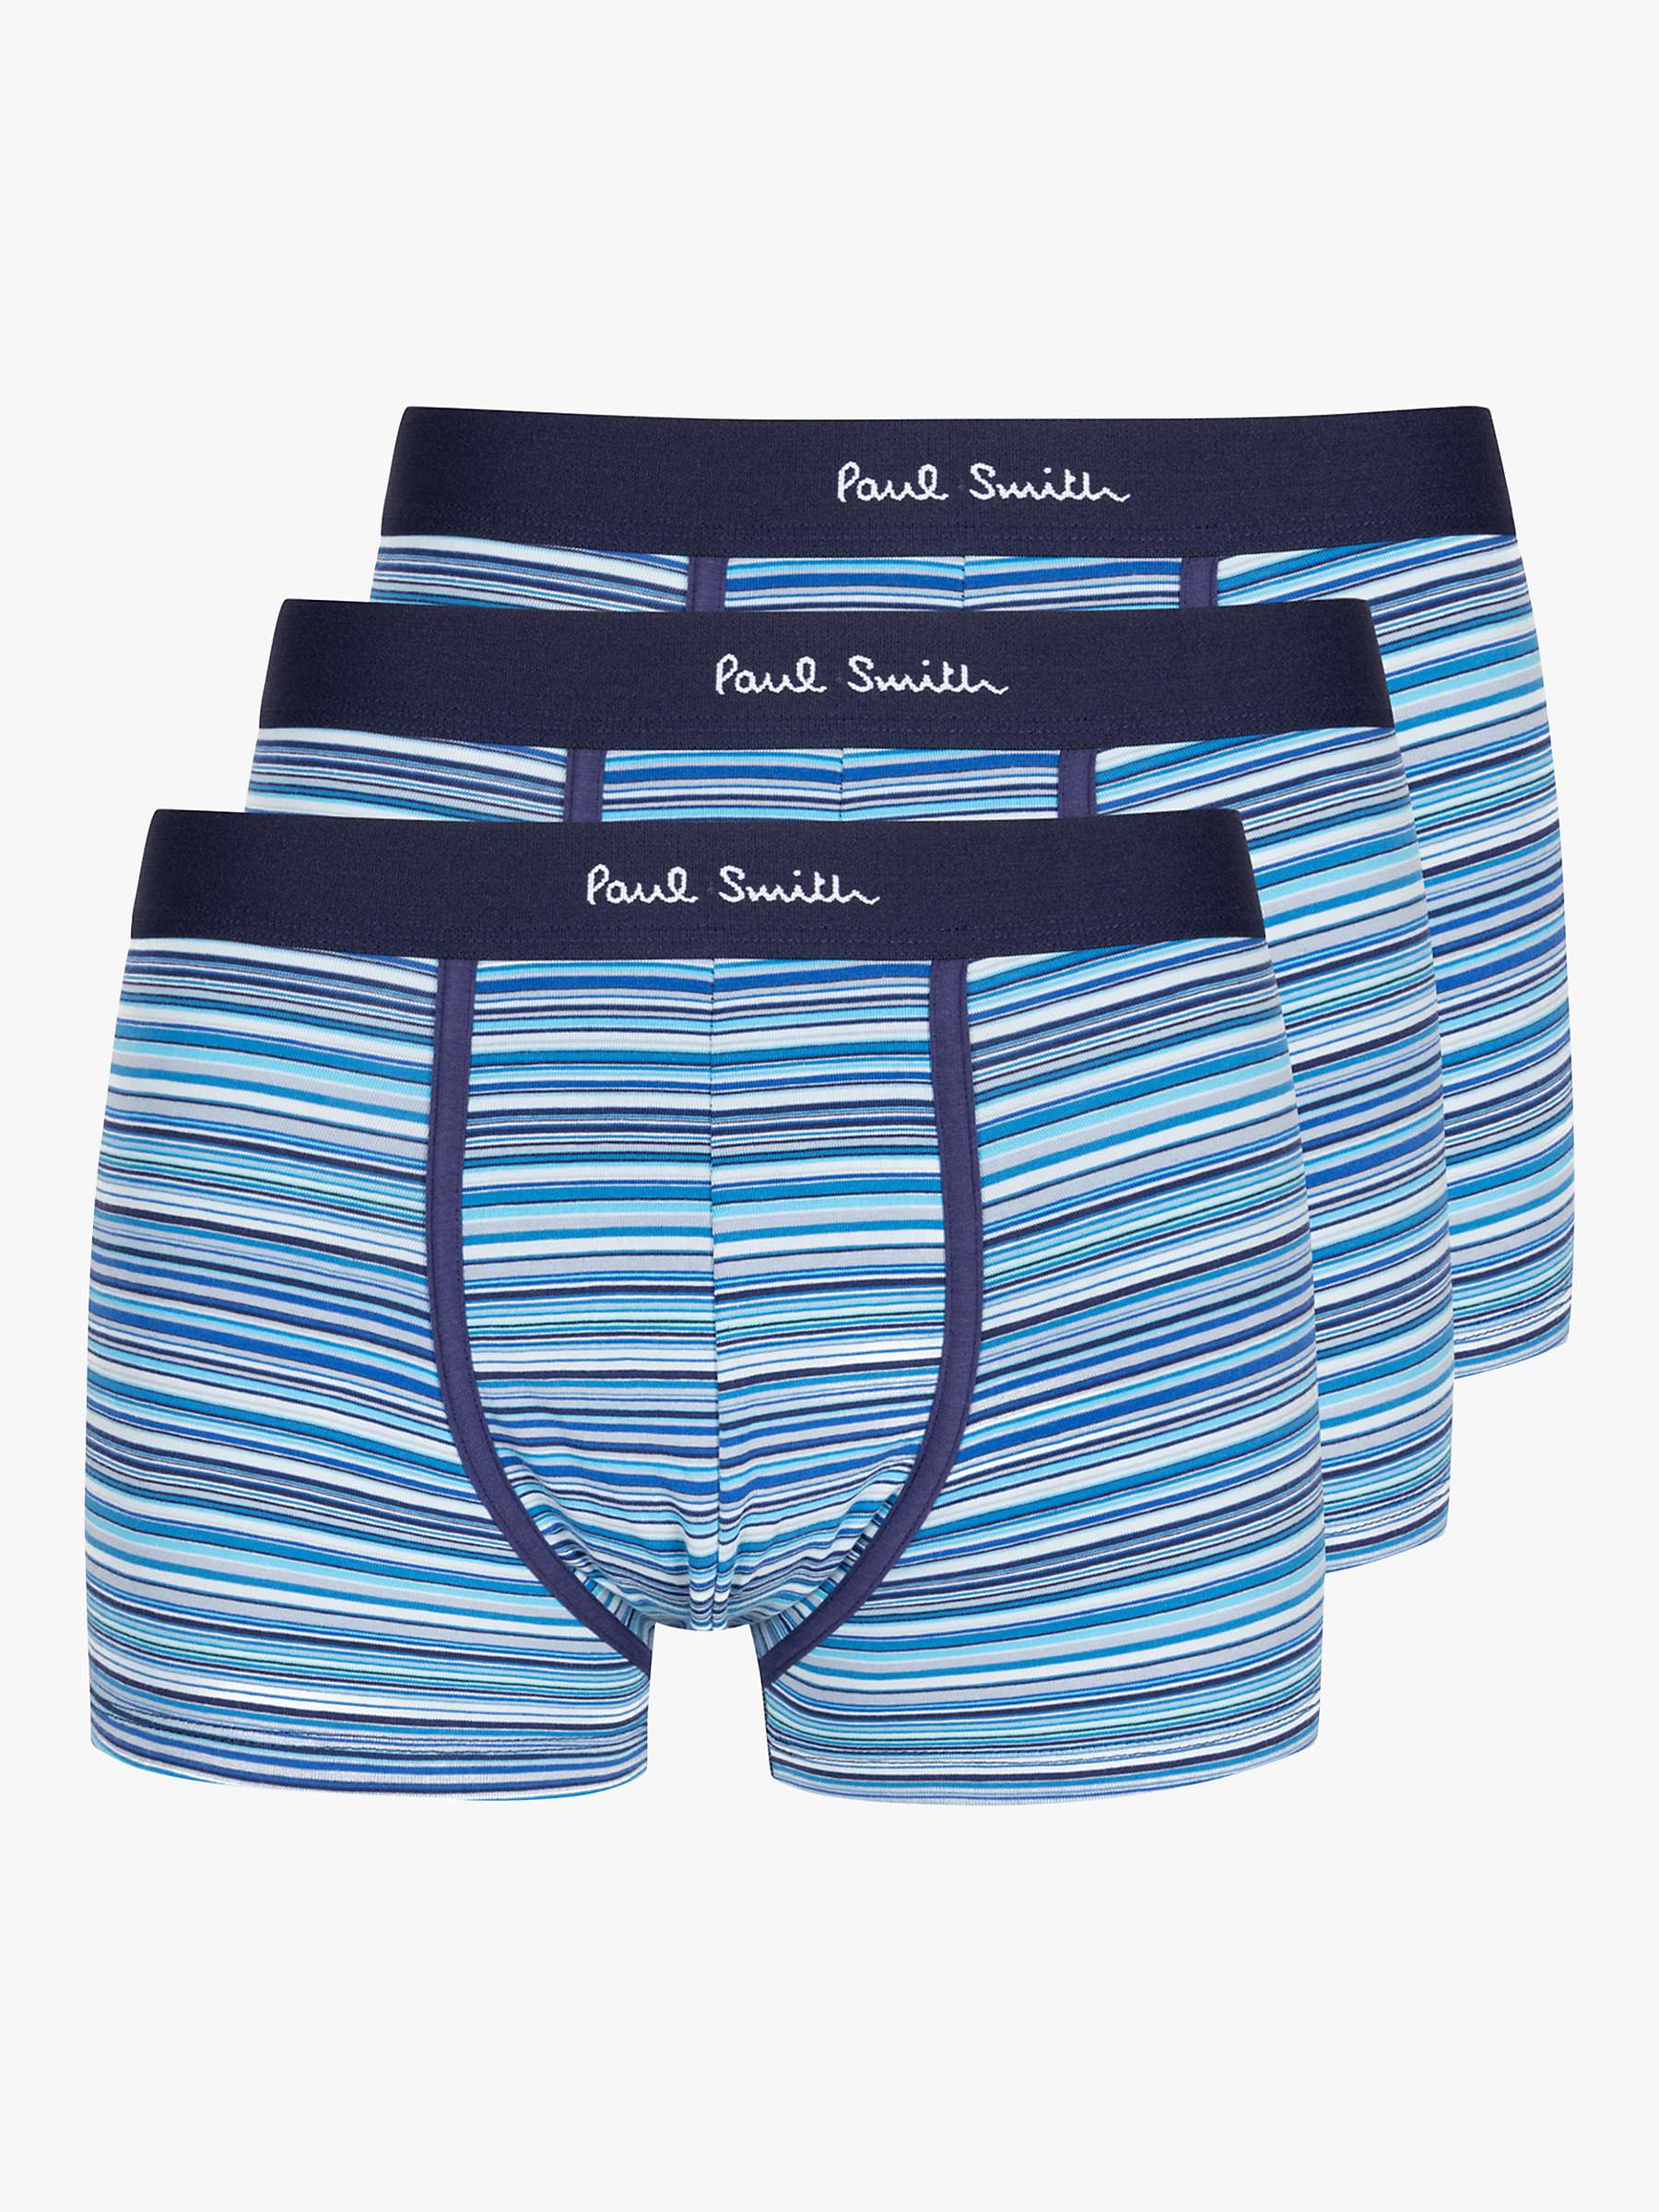 Buy Paul Smith Signature Stripe Organic Cotton Blend Trunks, Pack of 3, Blue/Multi Online at johnlewis.com